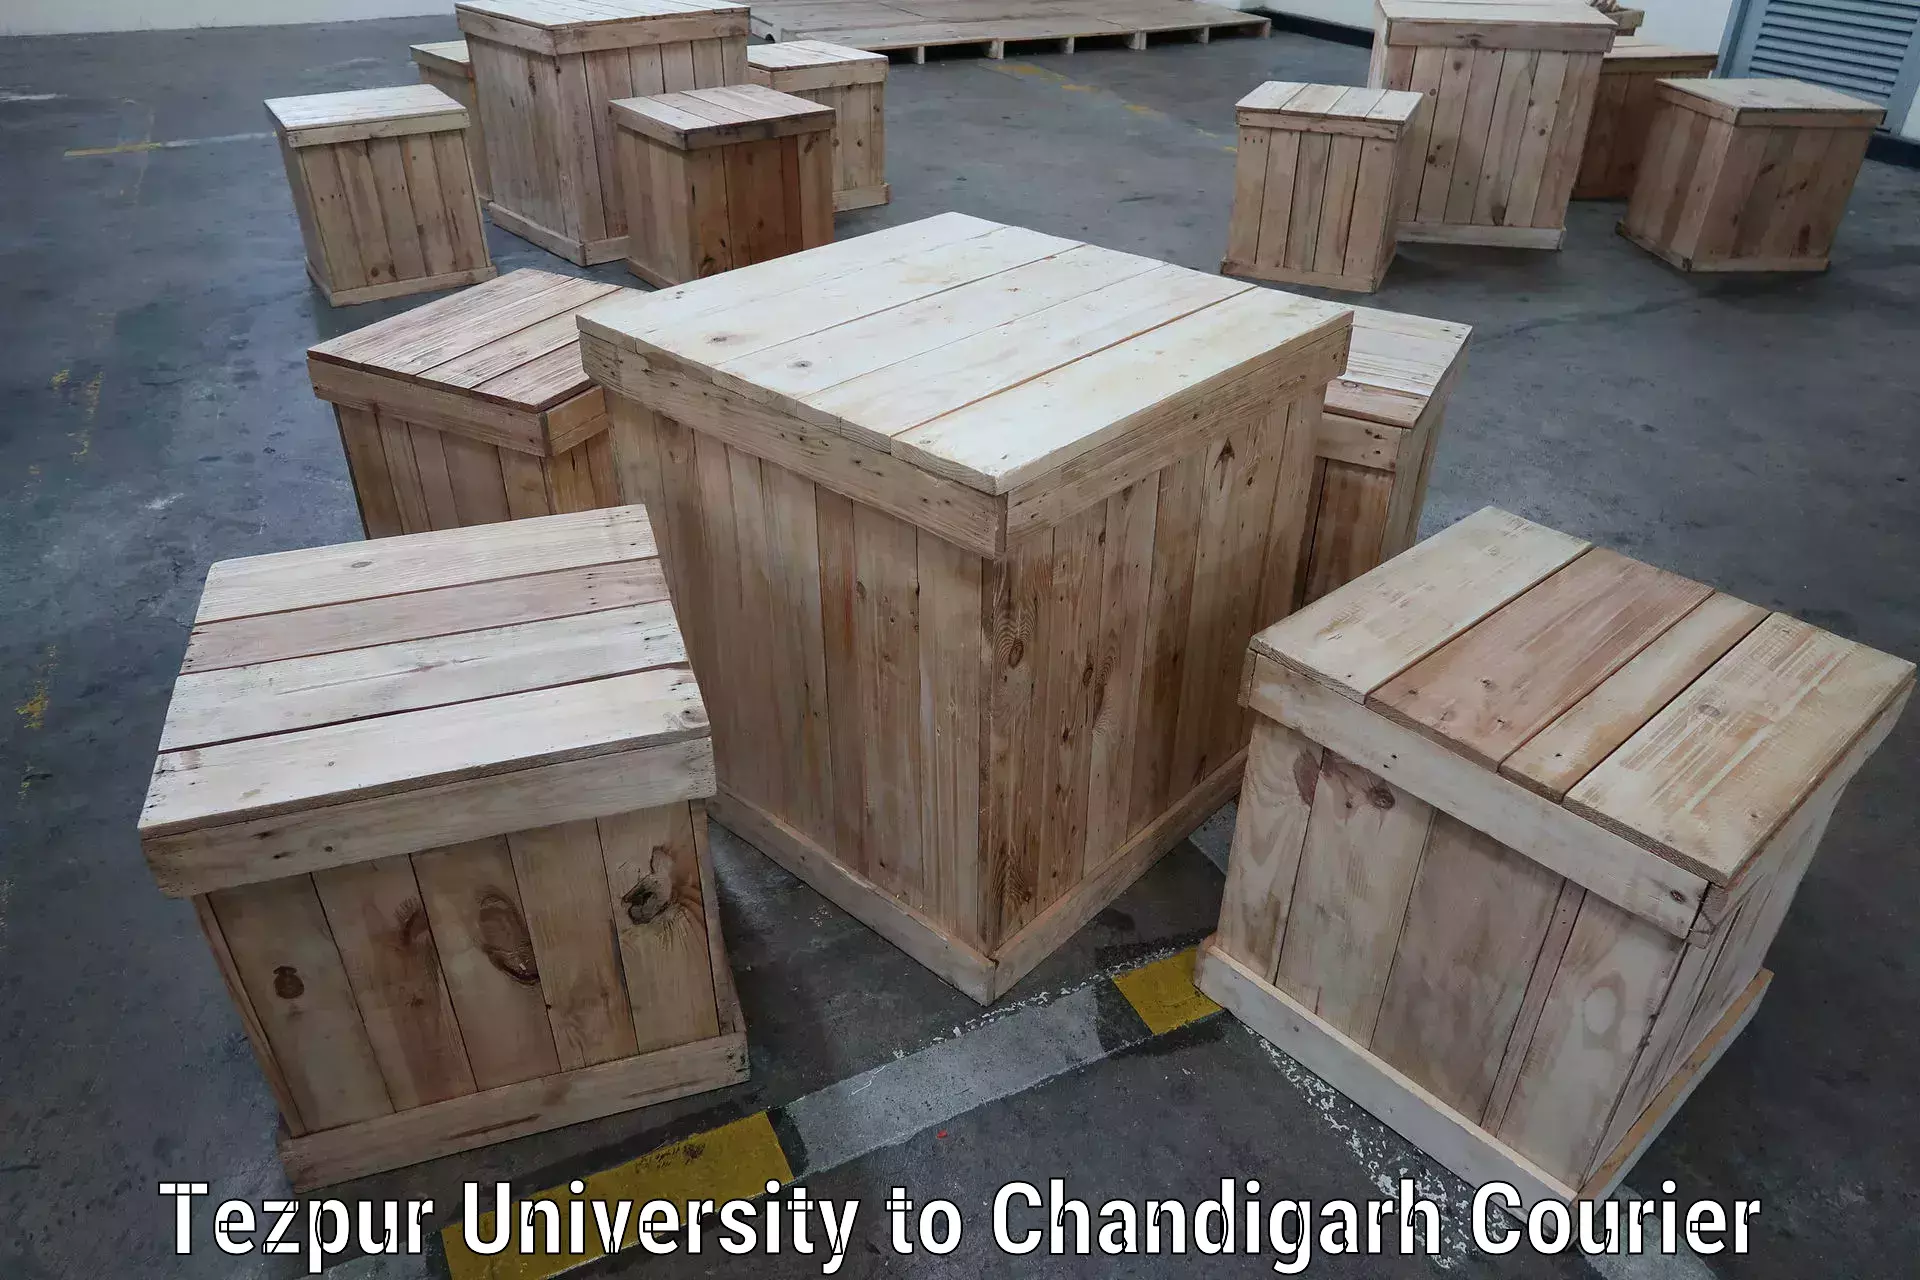 High-speed parcel service Tezpur University to Chandigarh